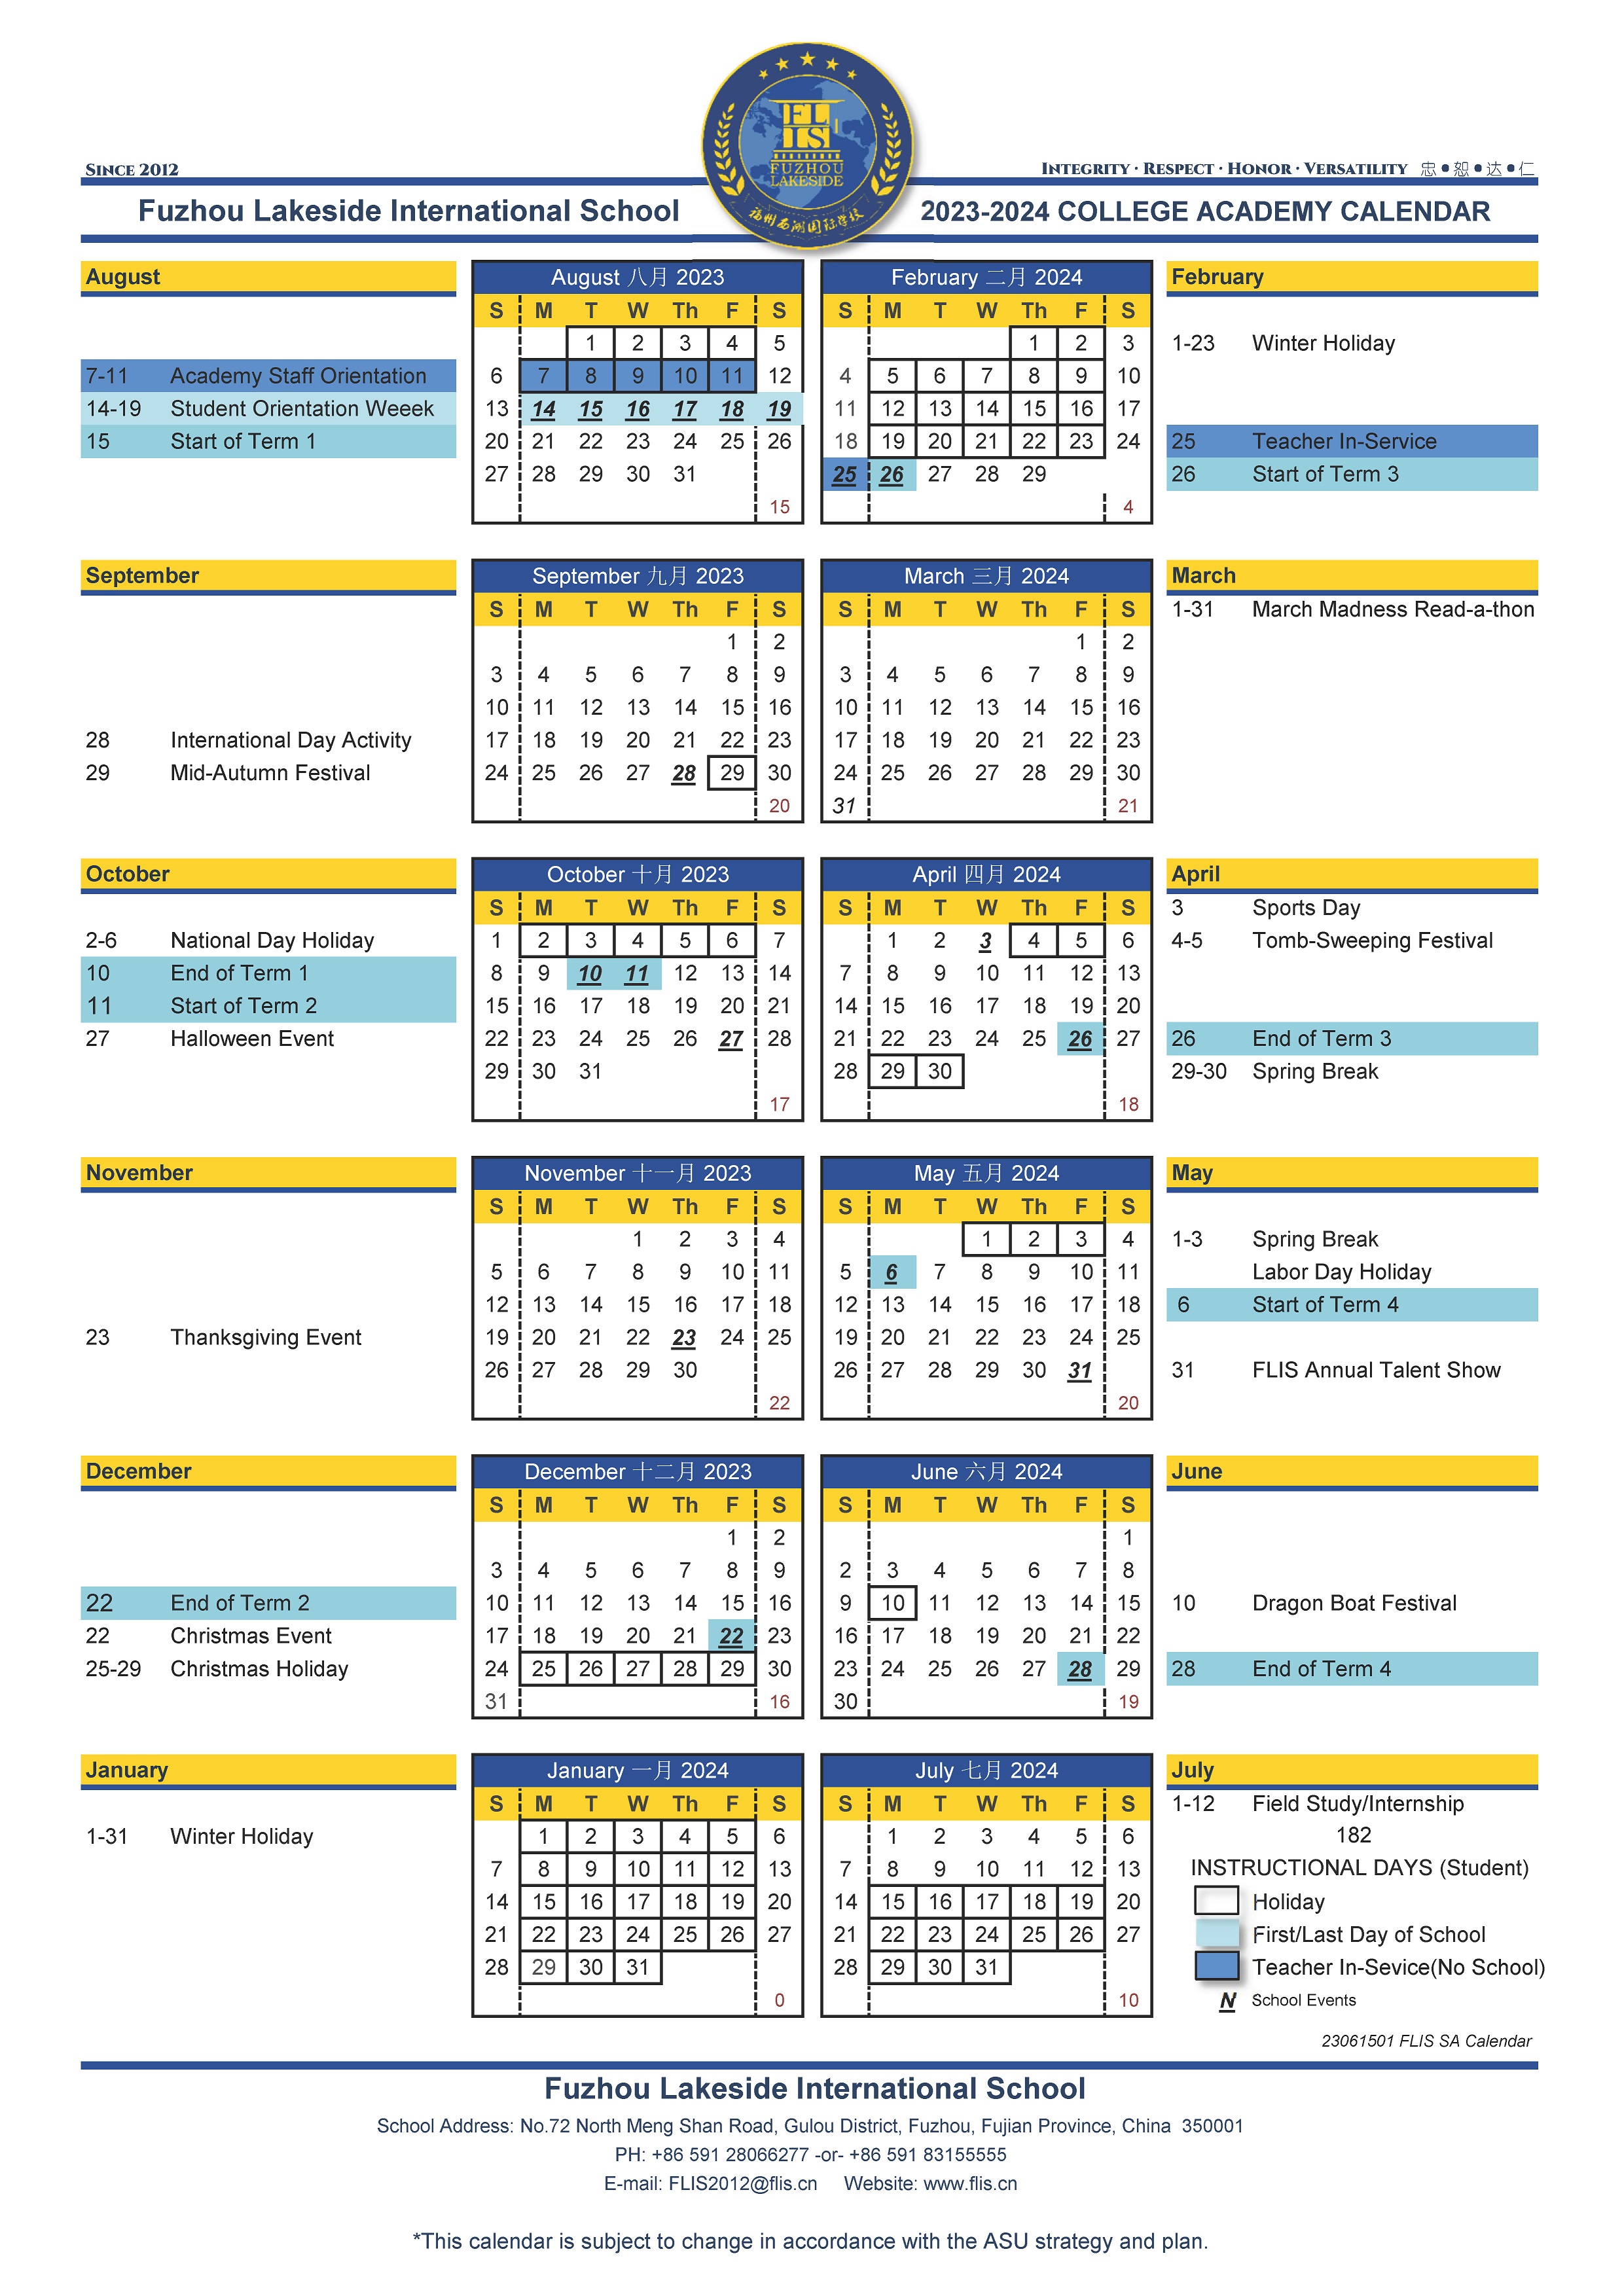 【23061501】School Calendar2023-2024 学院-new.jpg